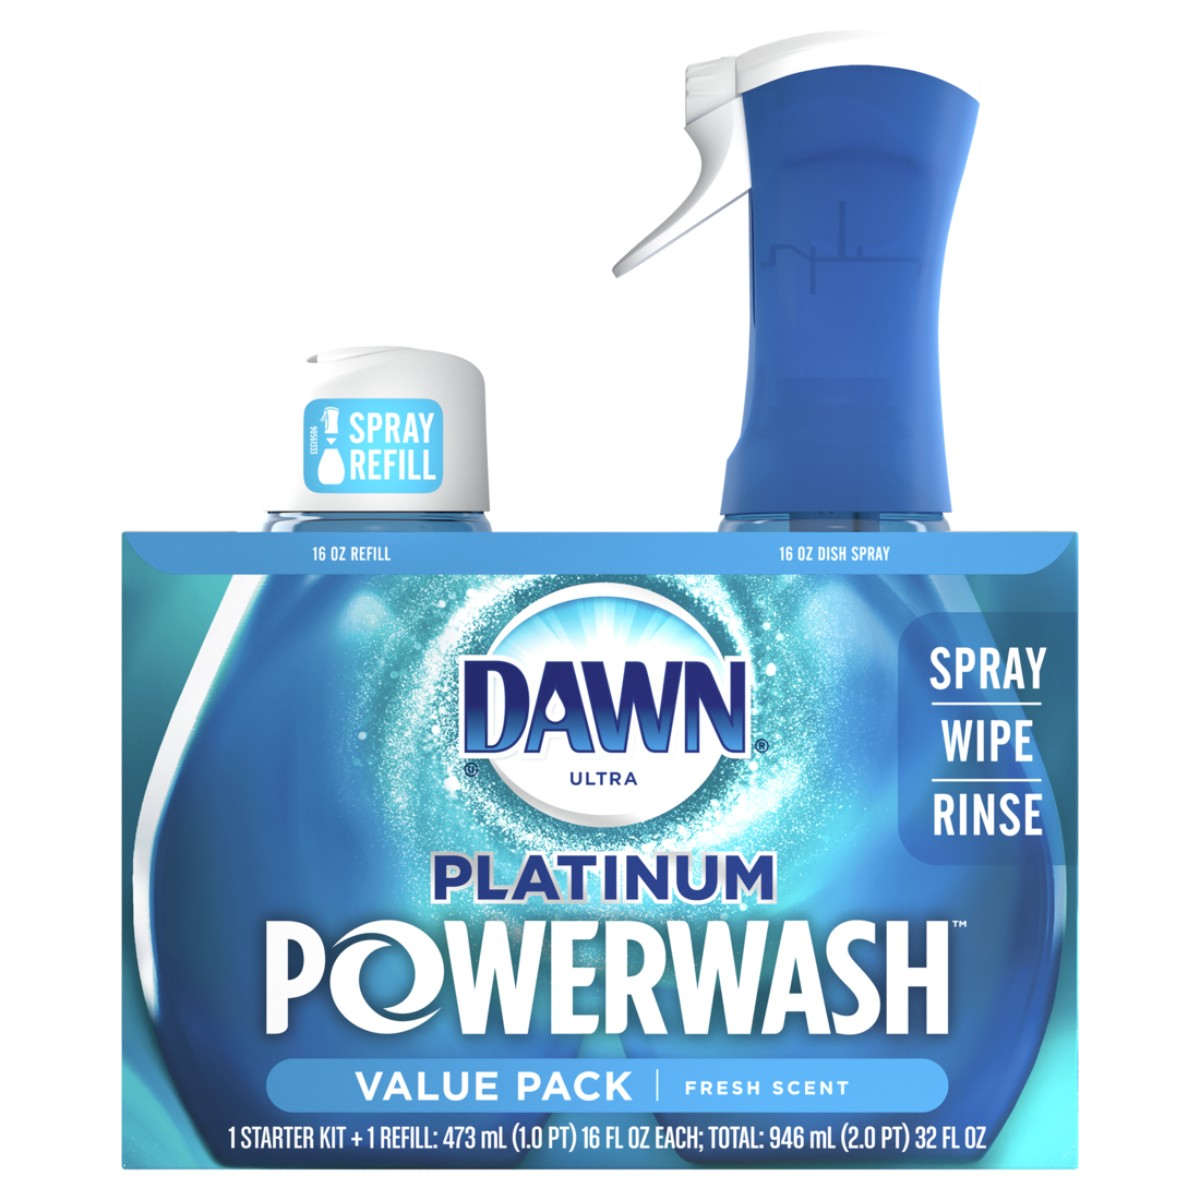 Dawn Platinum Powerwash Dish Spray Bundle